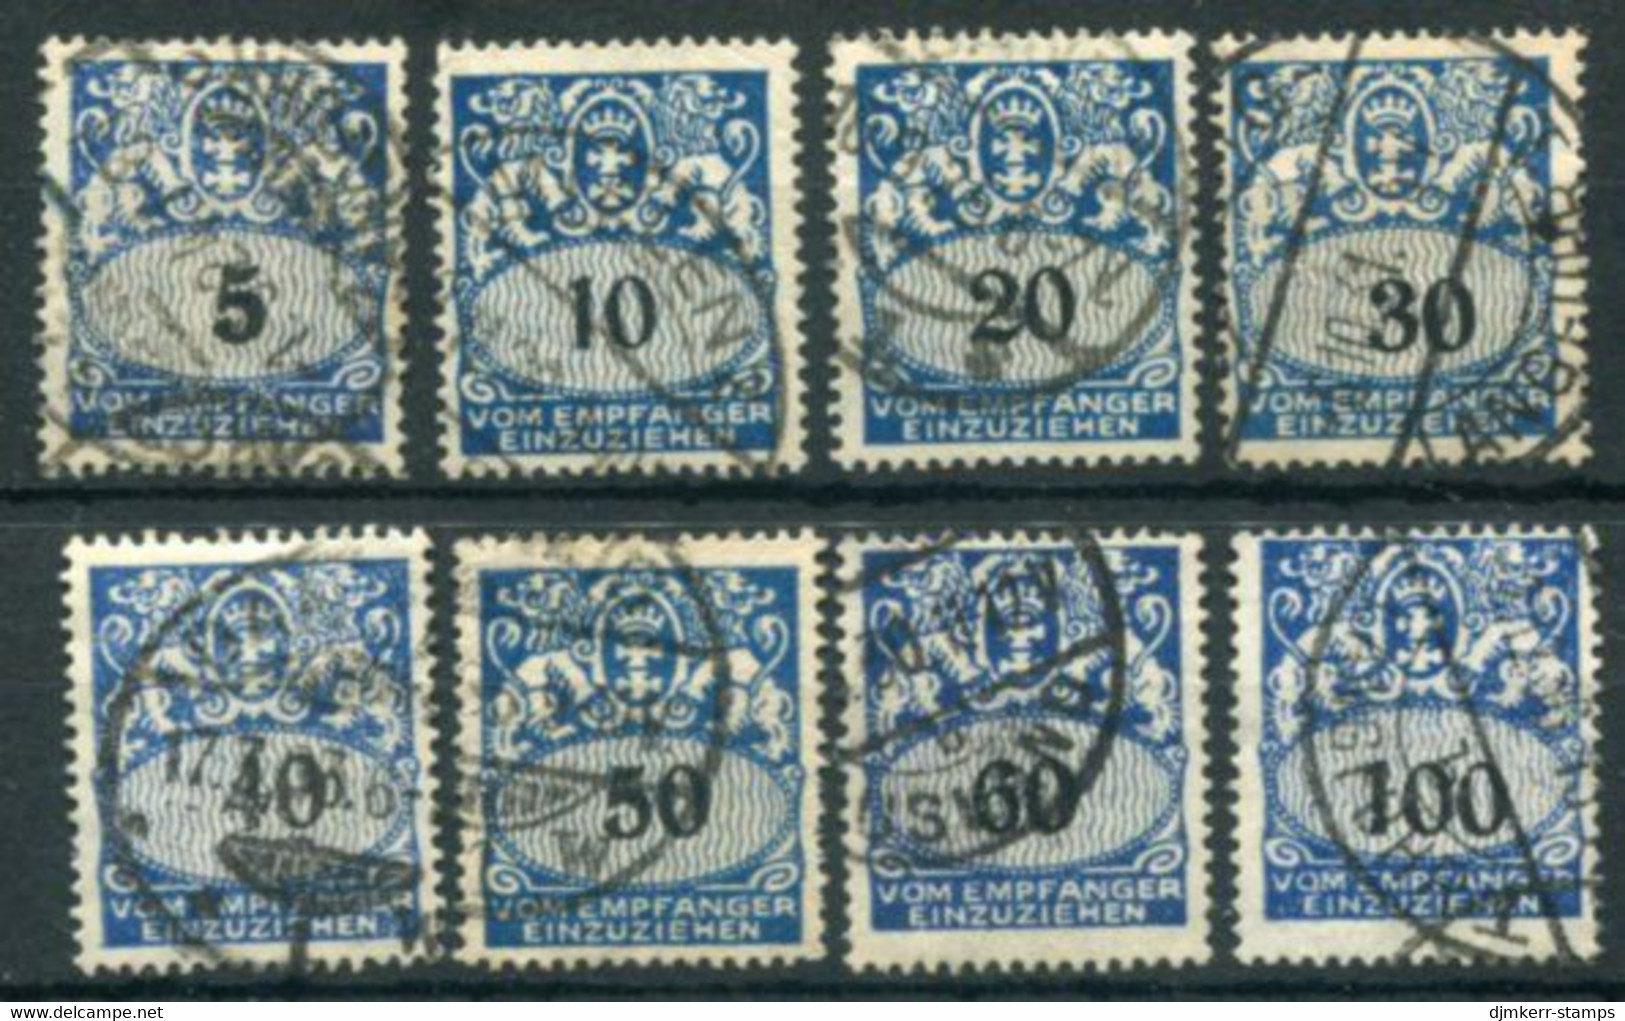 DANZIG 1923 Postage Due Set Of 8 Used.  Michel Porto 30-37 - Strafport